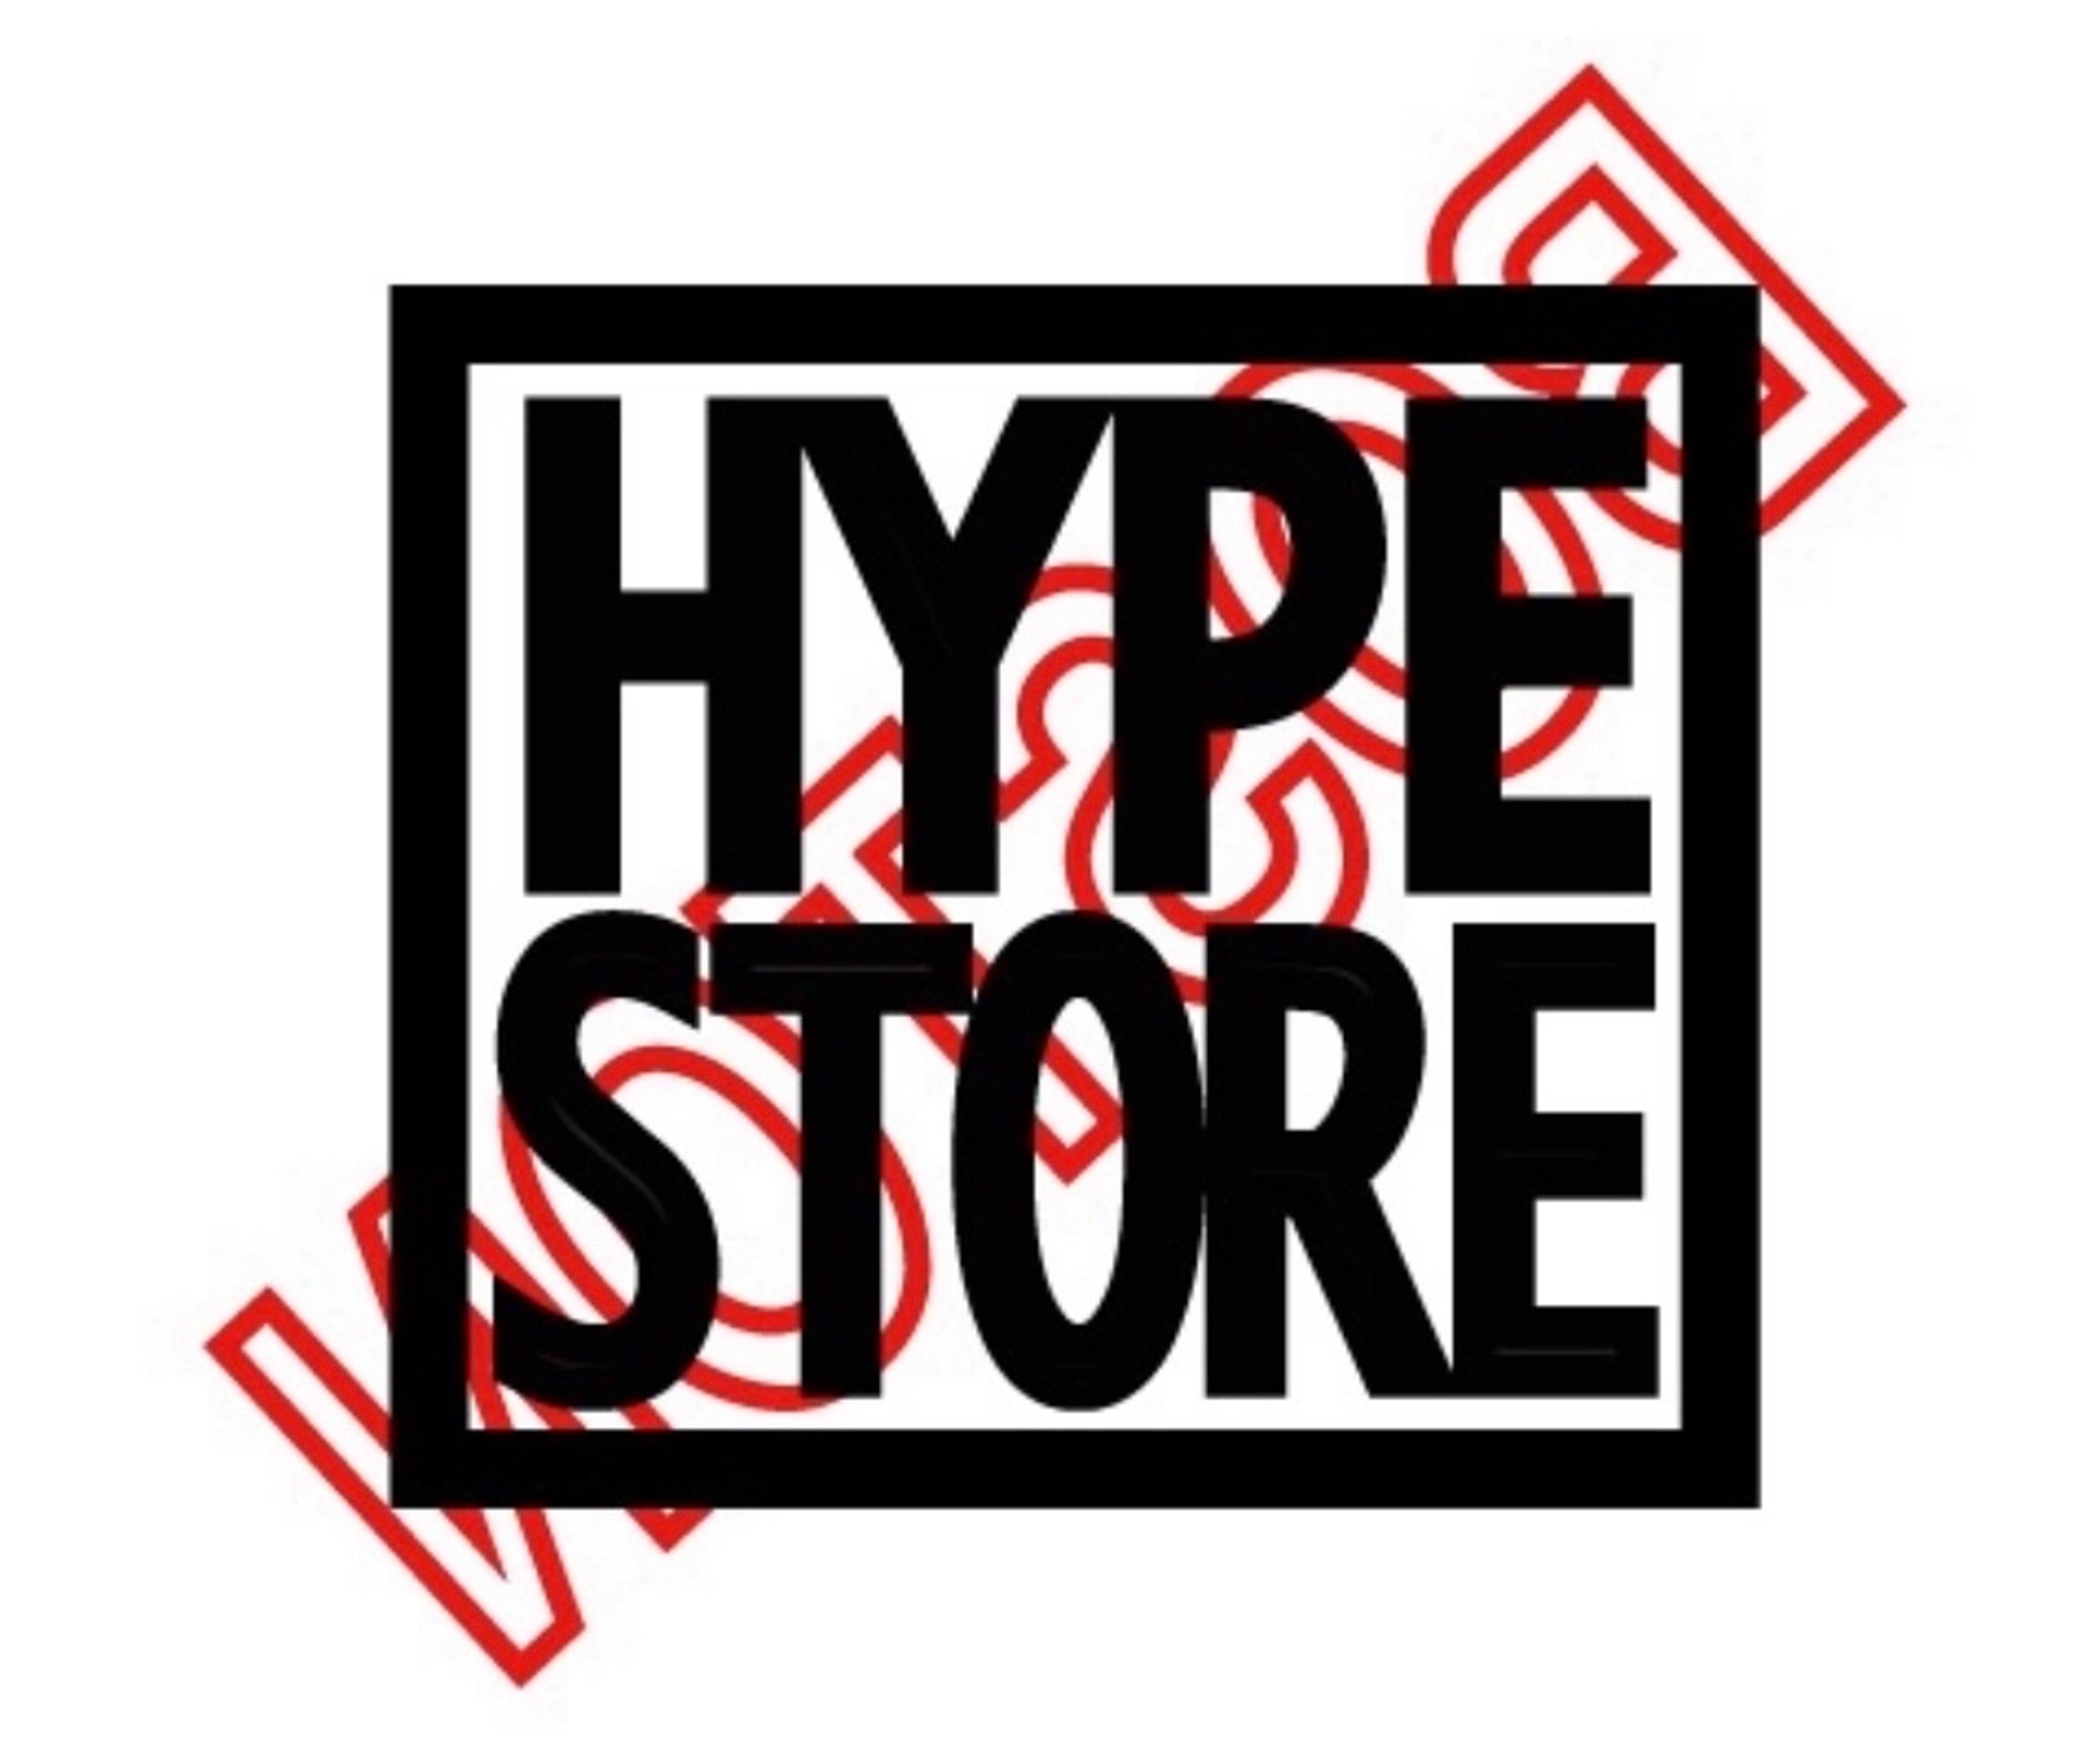 Hype Store Boston